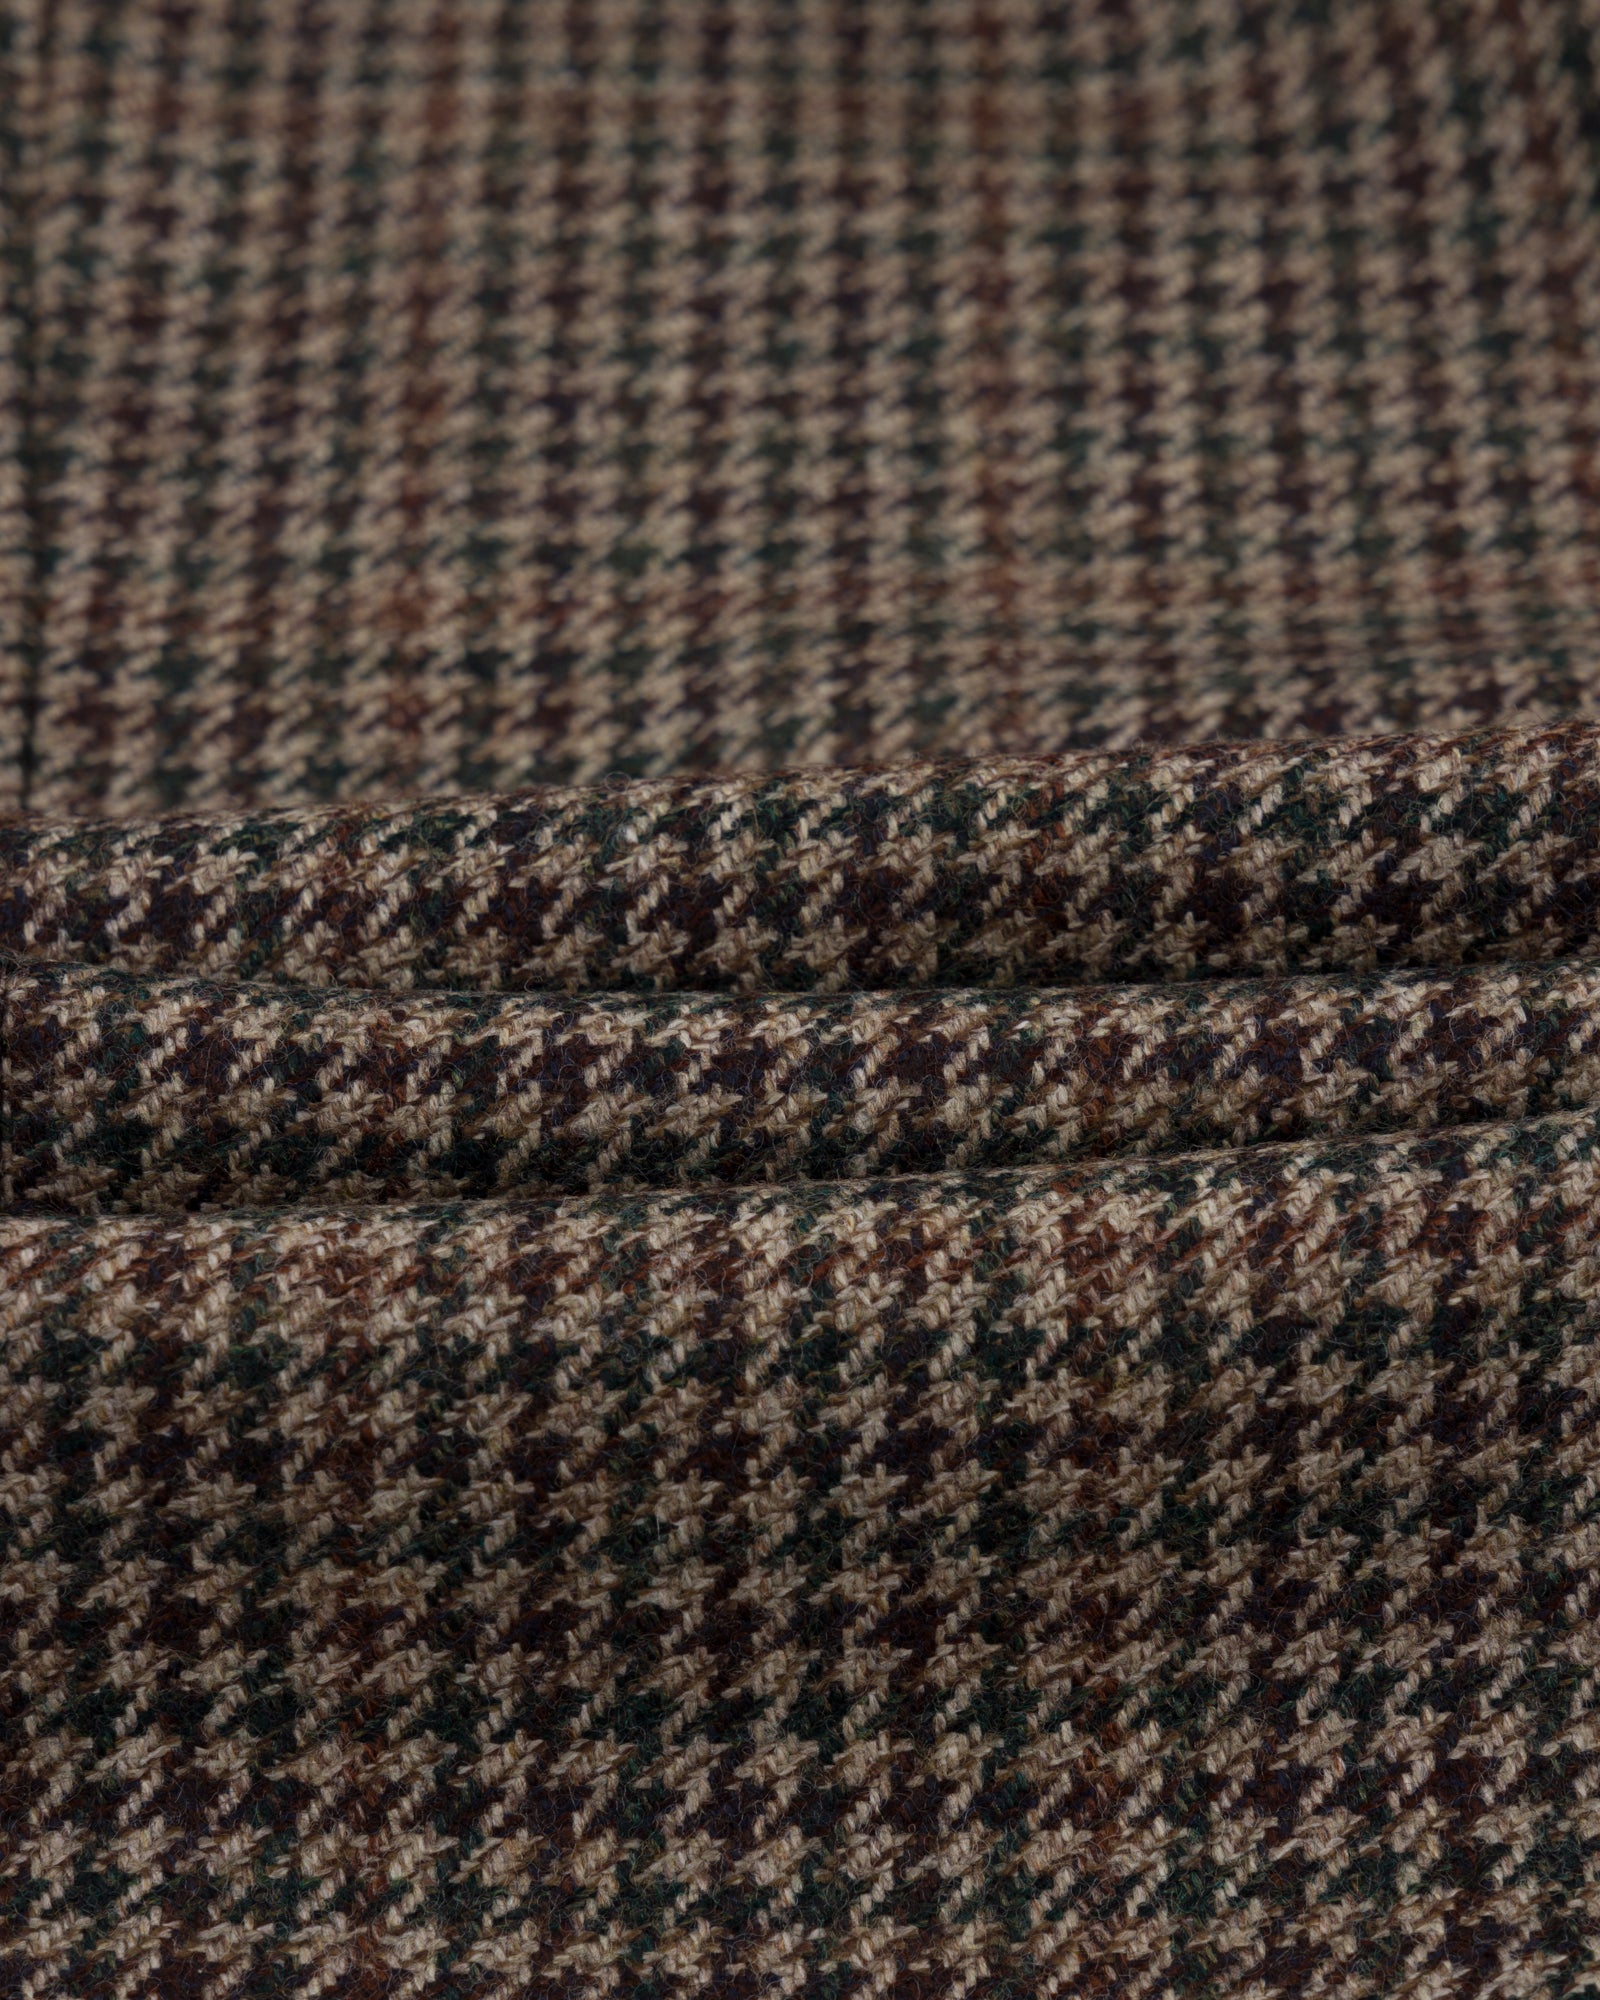 Sport Jacket - Brown Green Check Wool